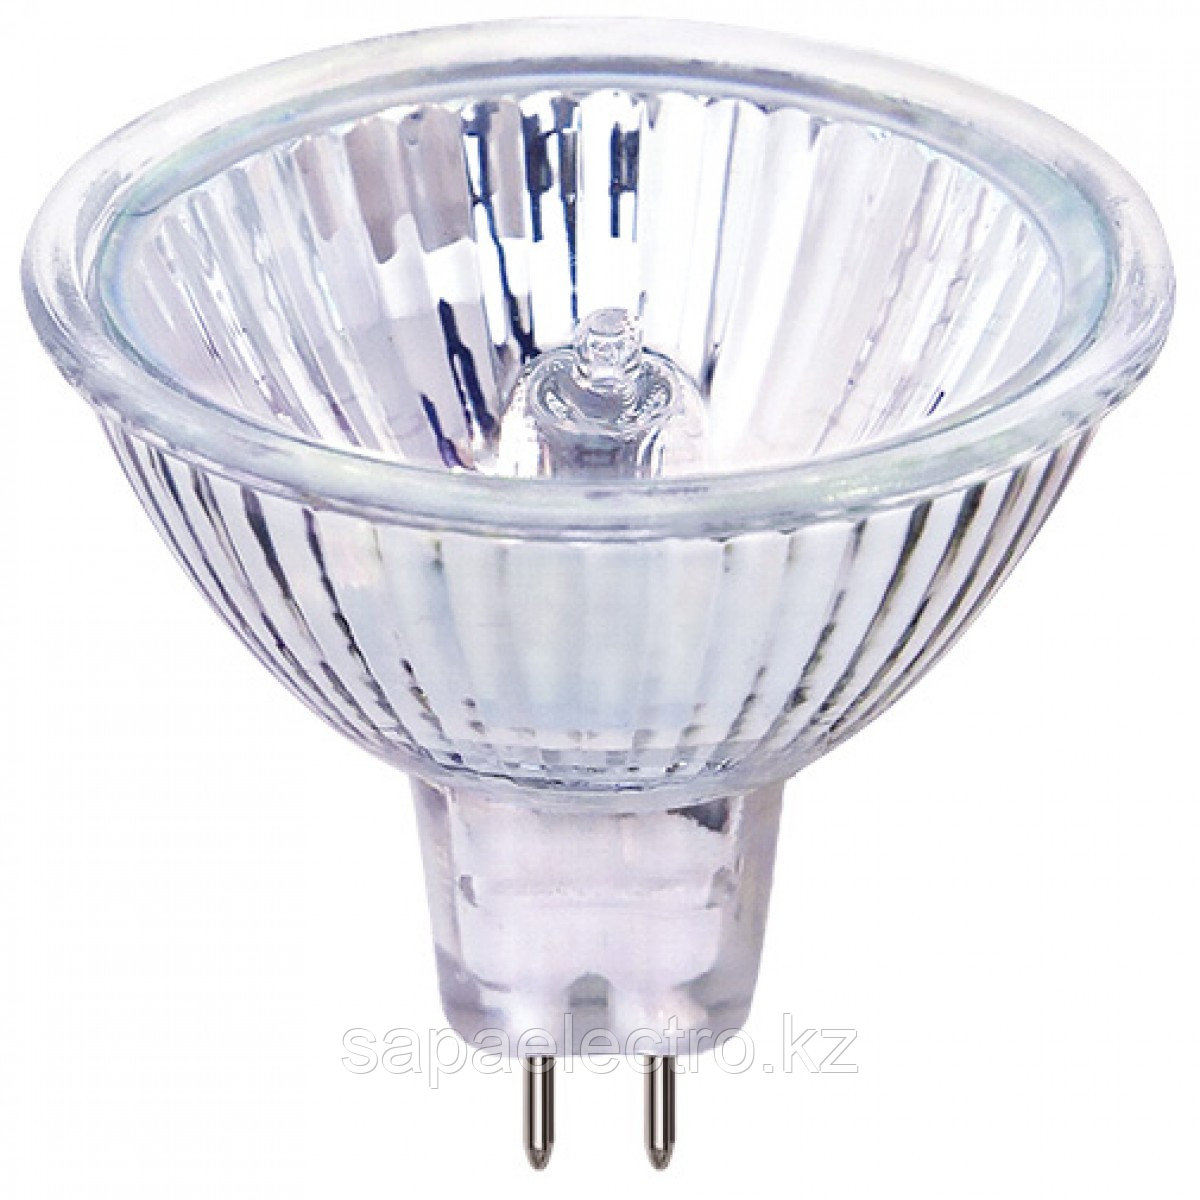 Лампа MR16 12V 50W  со стеклом/CAM  (TL)200шт